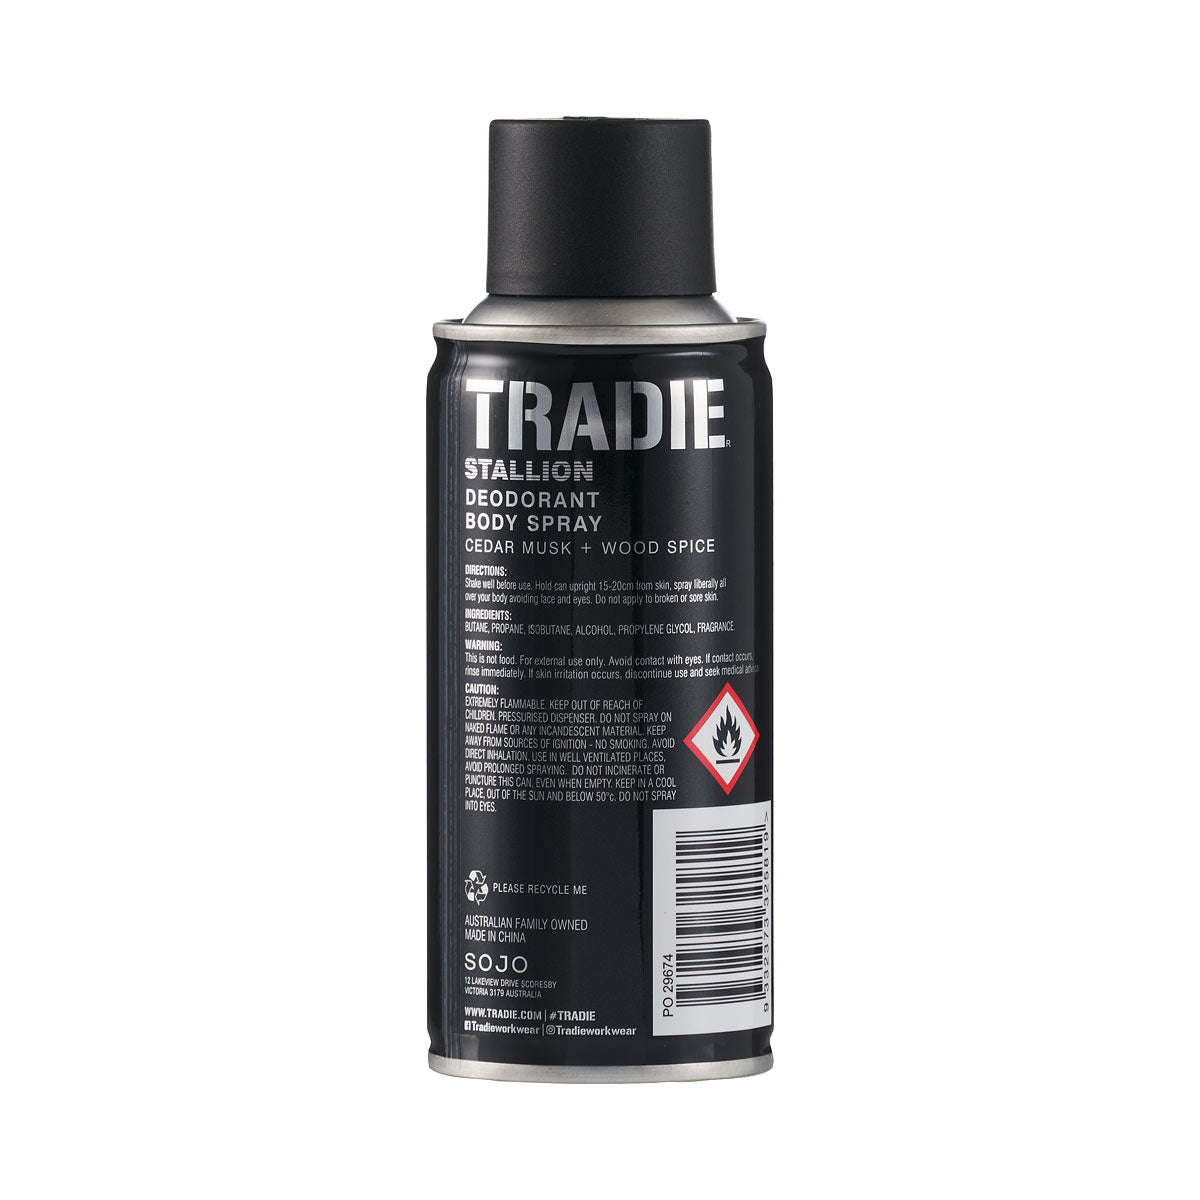 Tradie Deodorant Stallion 160mL